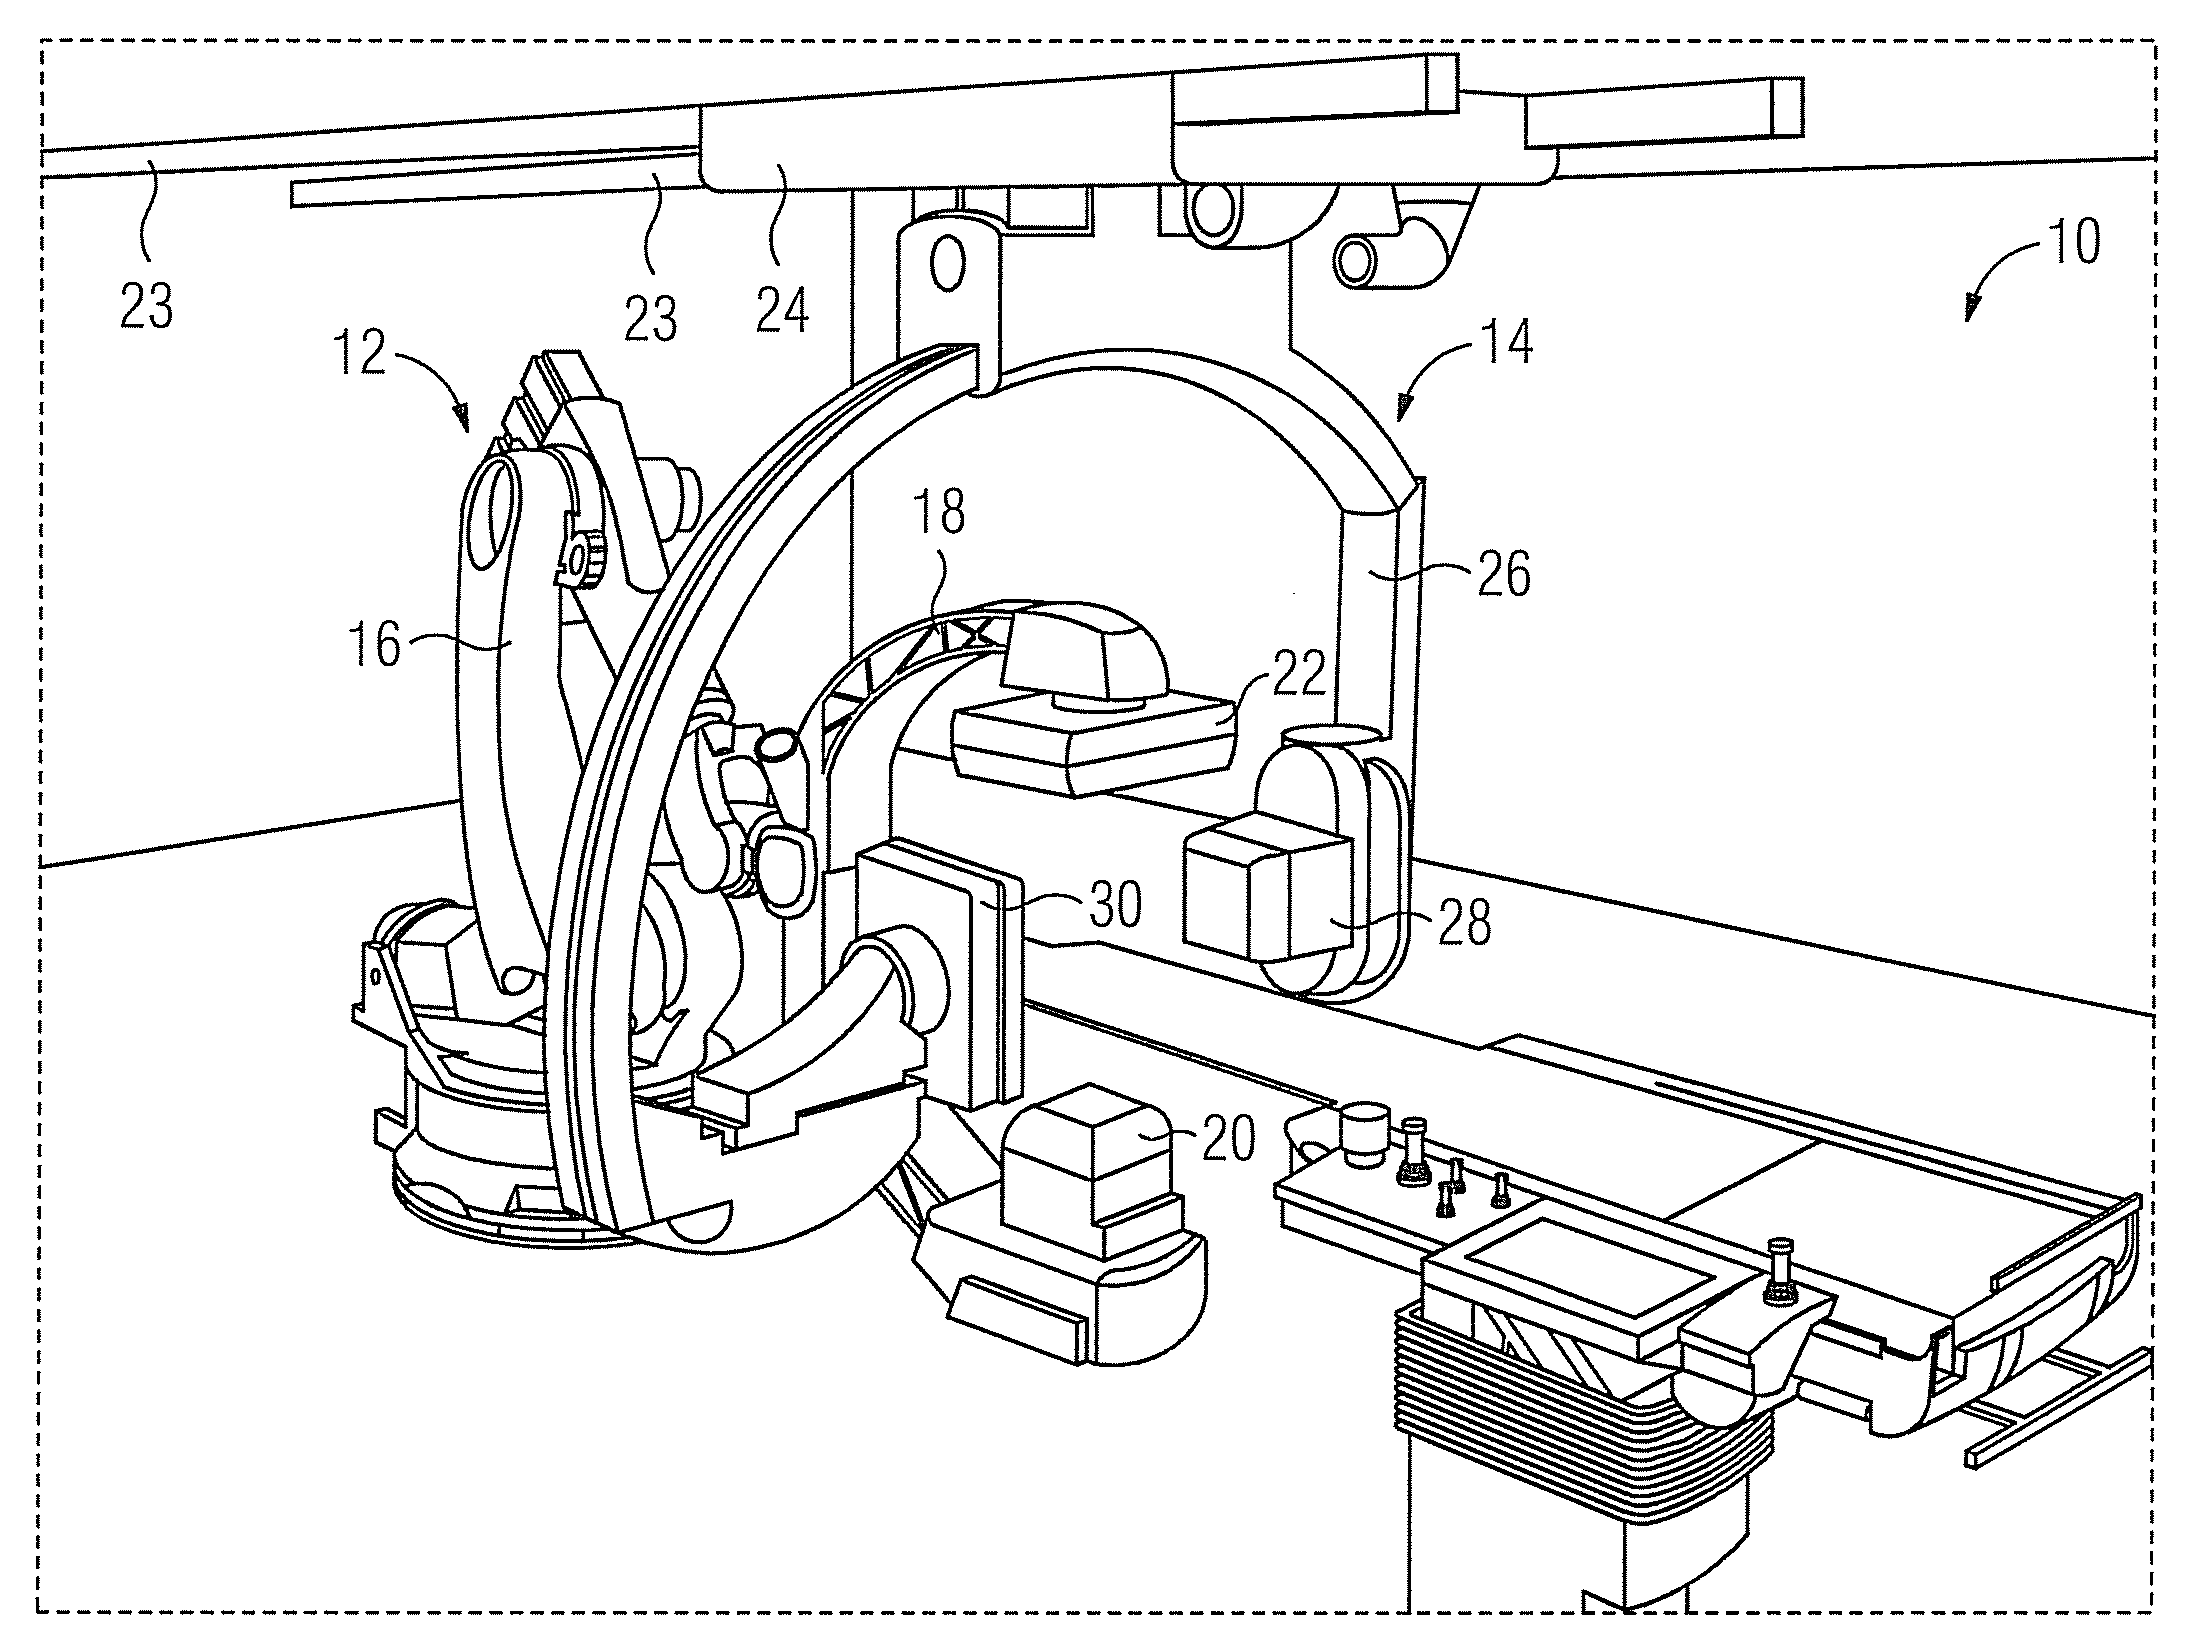 Biplane X-ray system